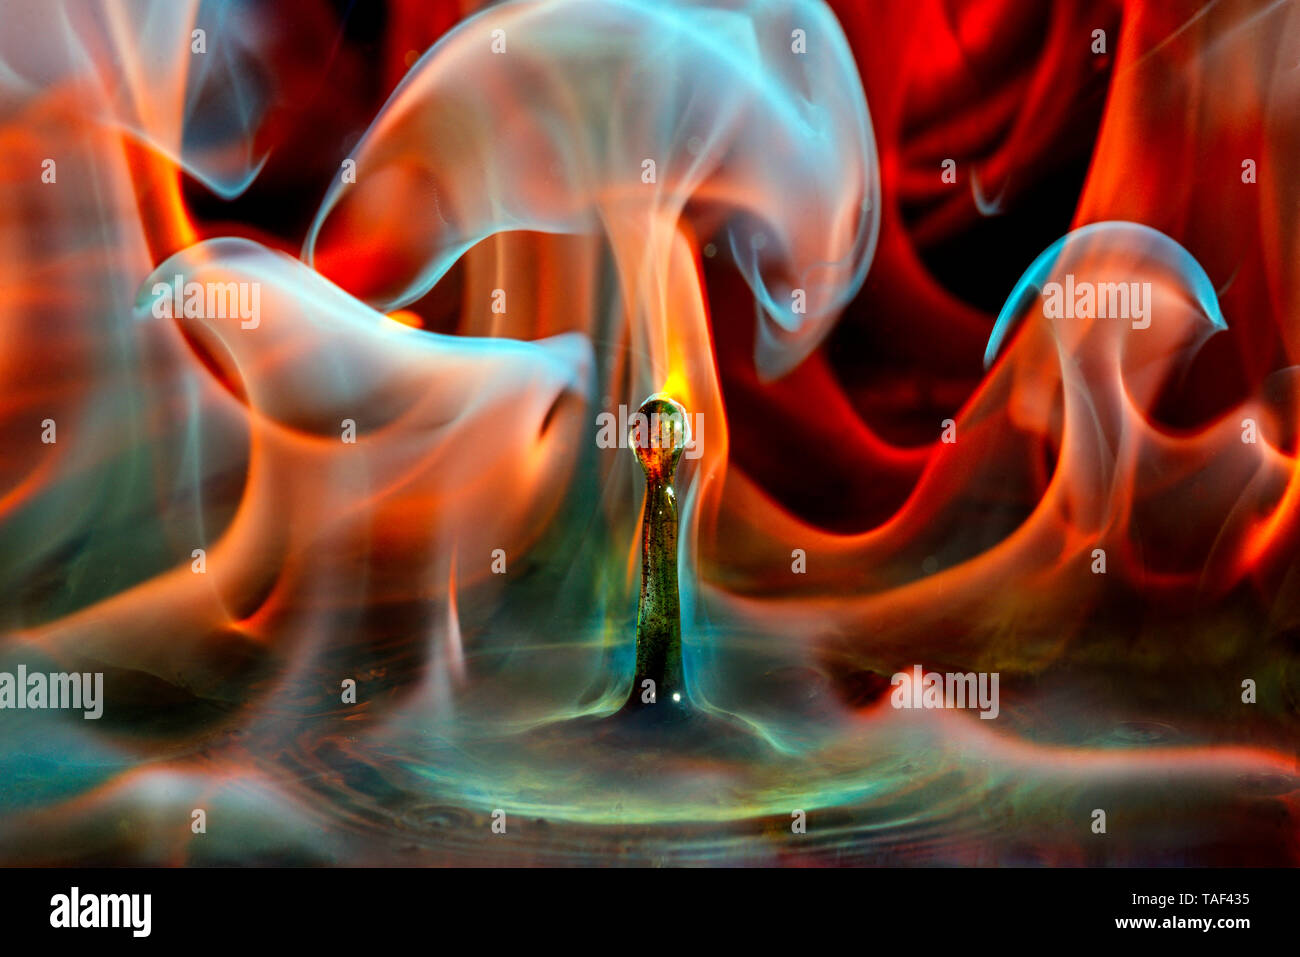 Burning drop, drop of water into benzine Stock Photo - Alamy